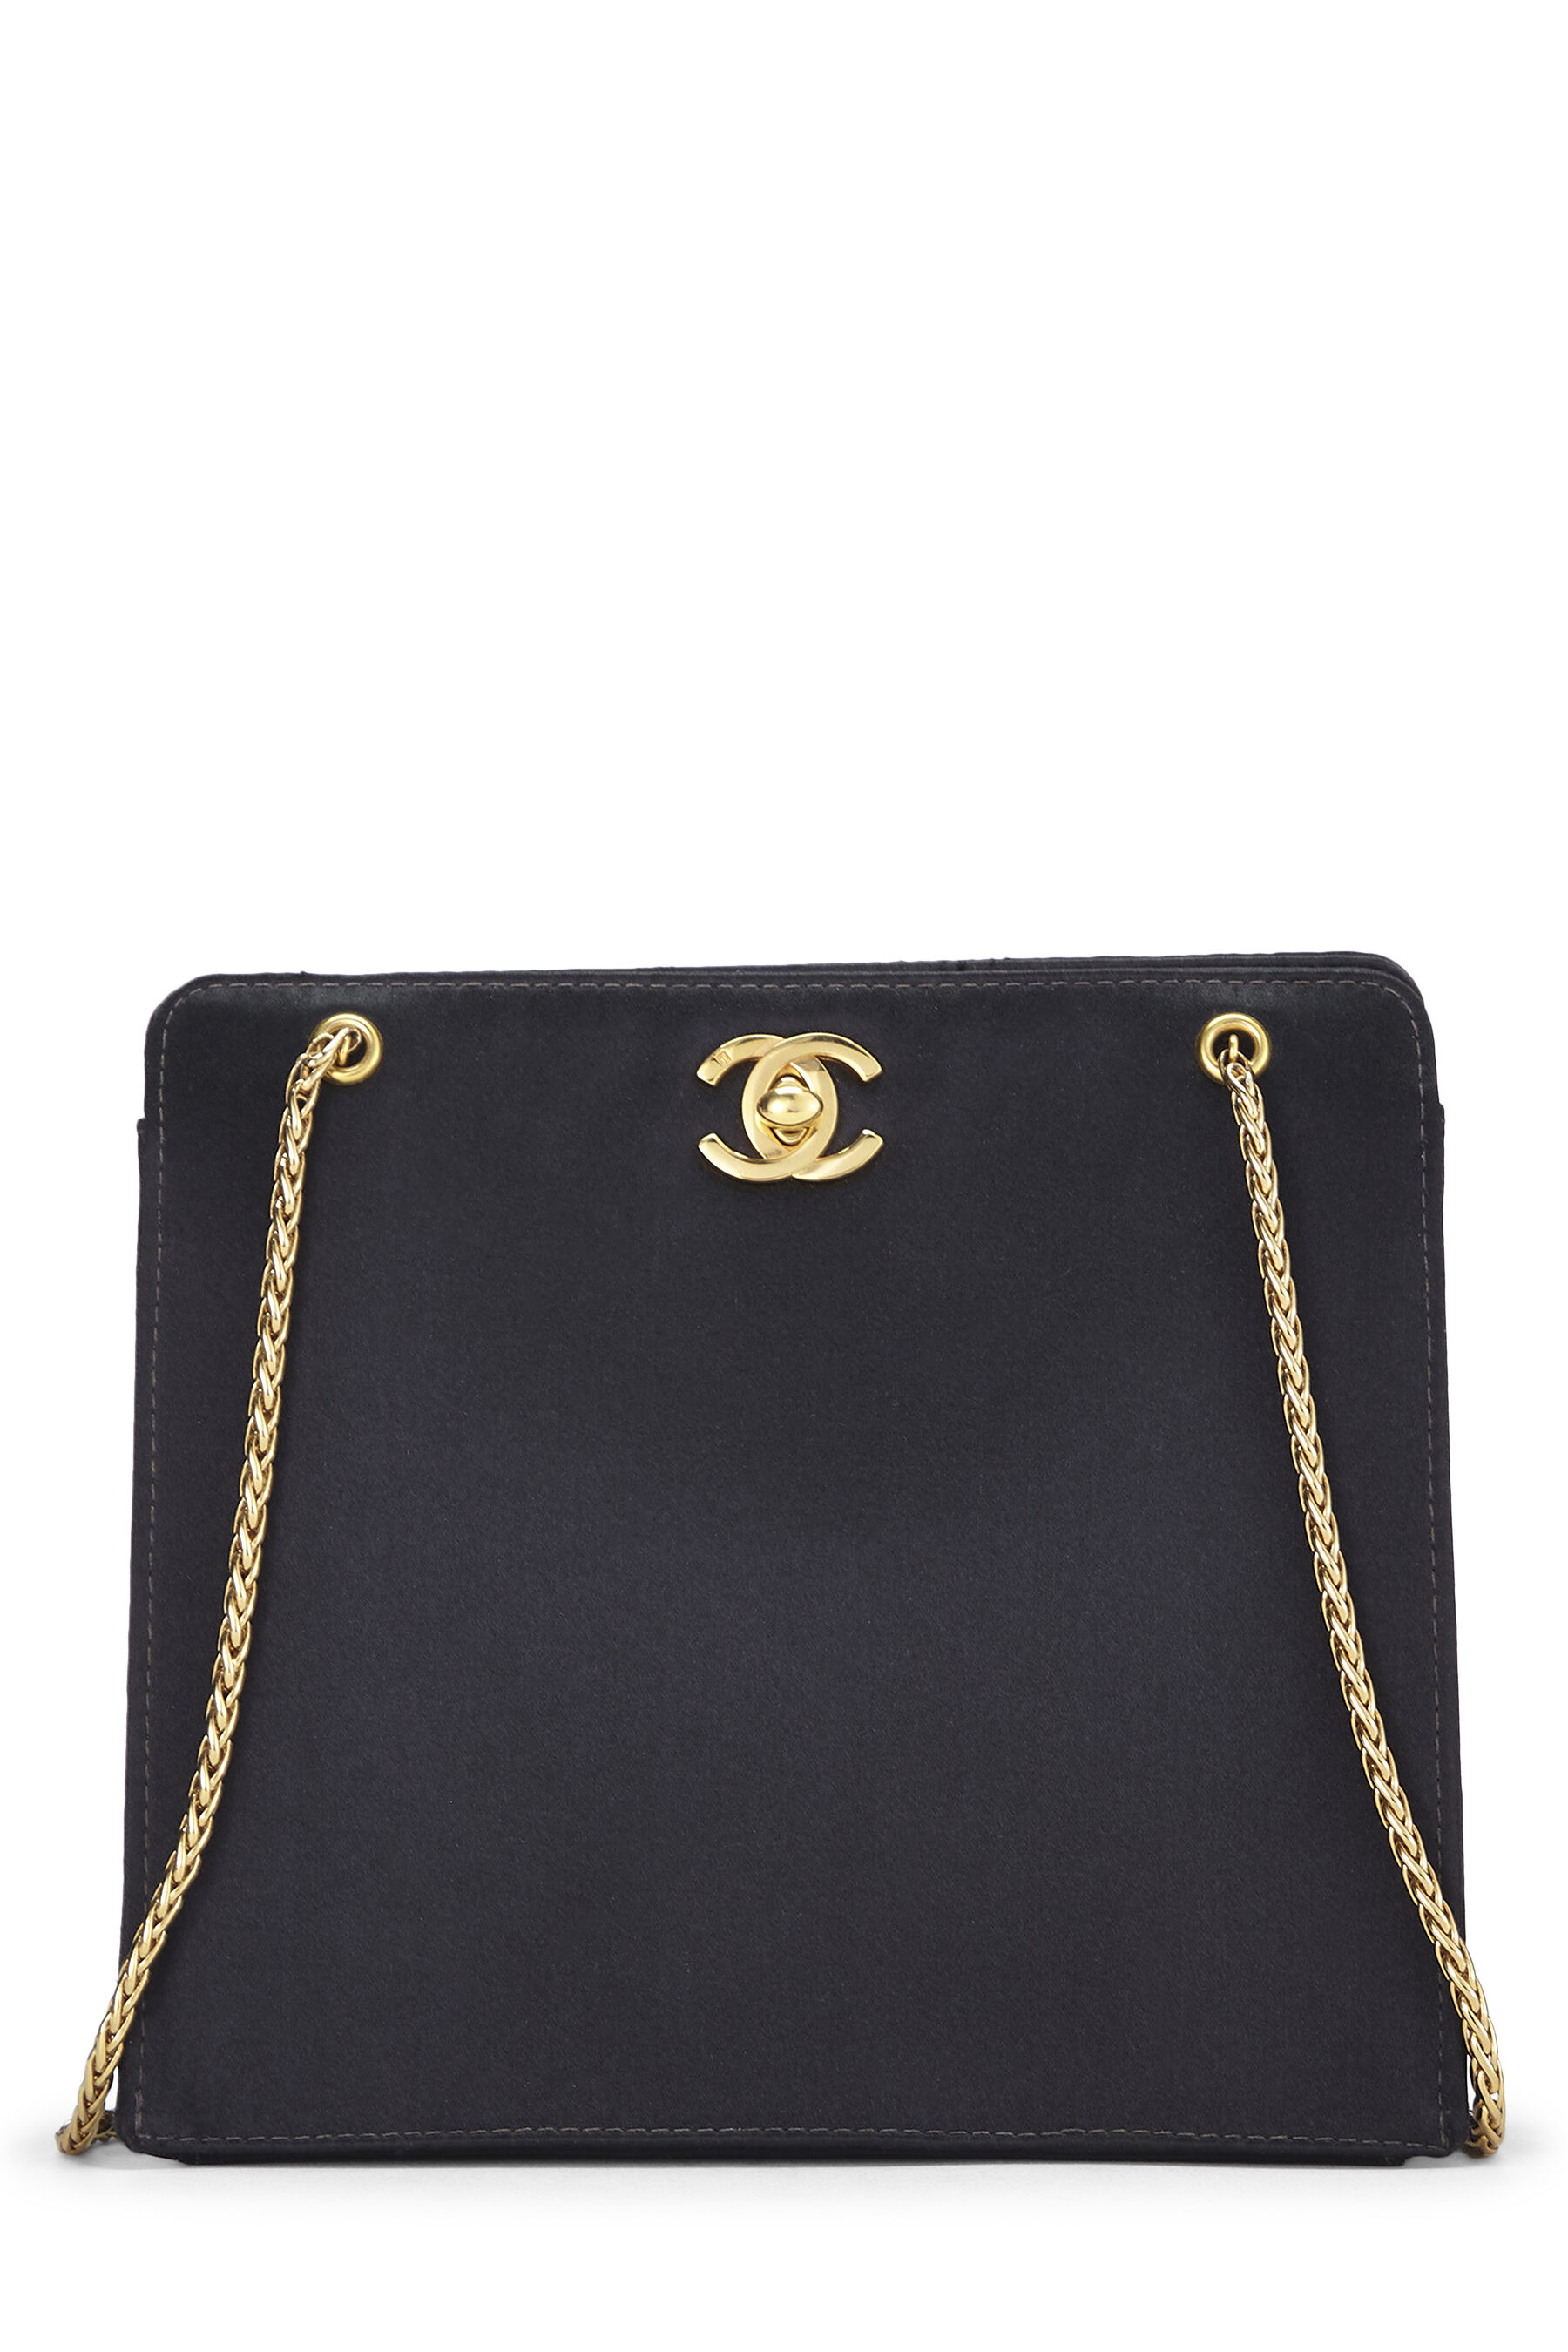 Chanel Black Satin 'CC' Shoulder Bag Mini